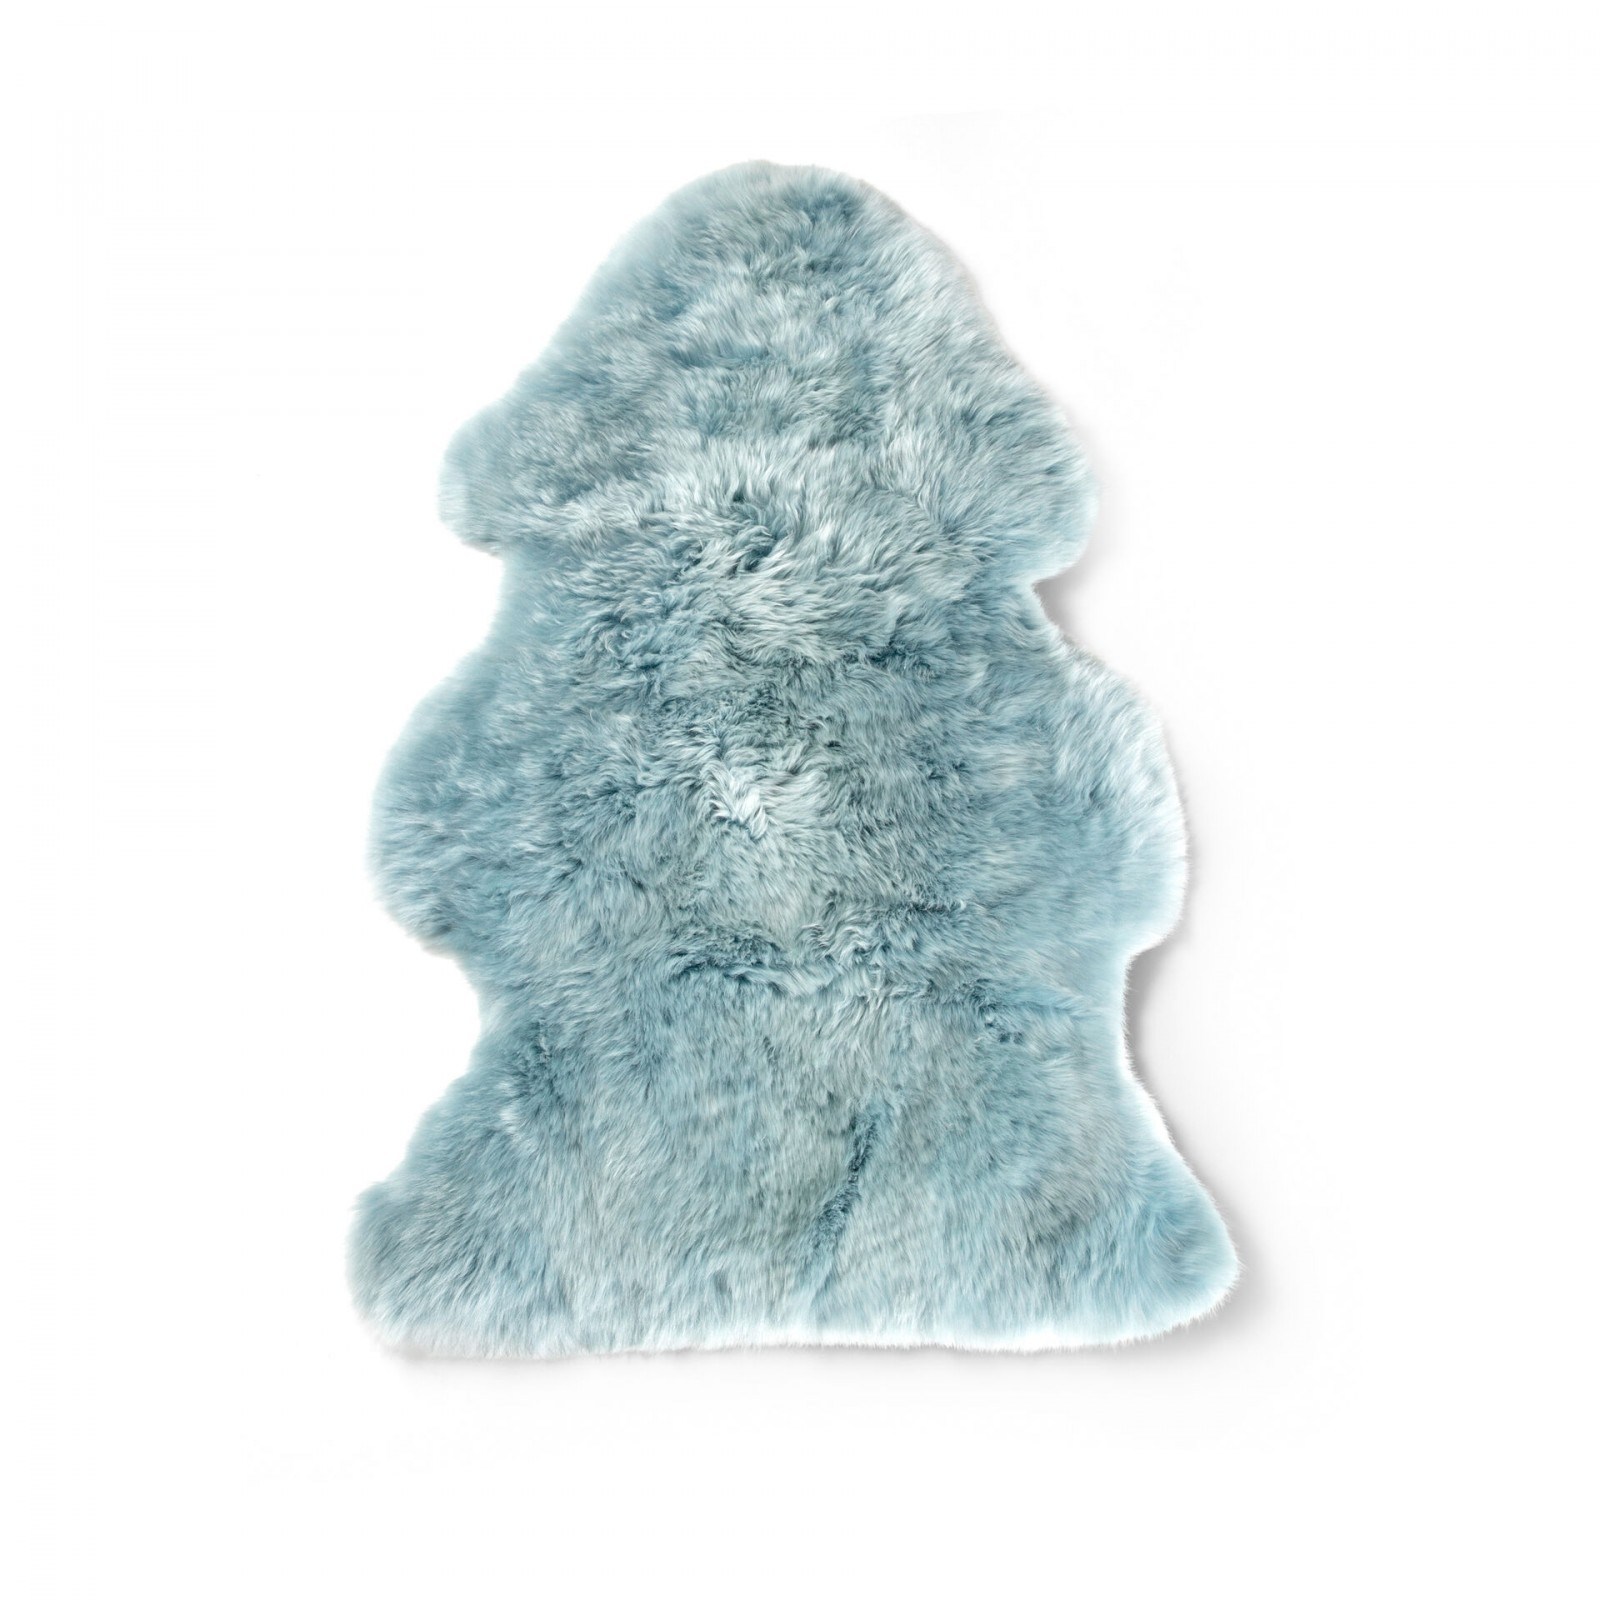 Kožešina DEKO barvená Velikost: 90 - 100 cm, Zvolte variantu: Ledově modrá